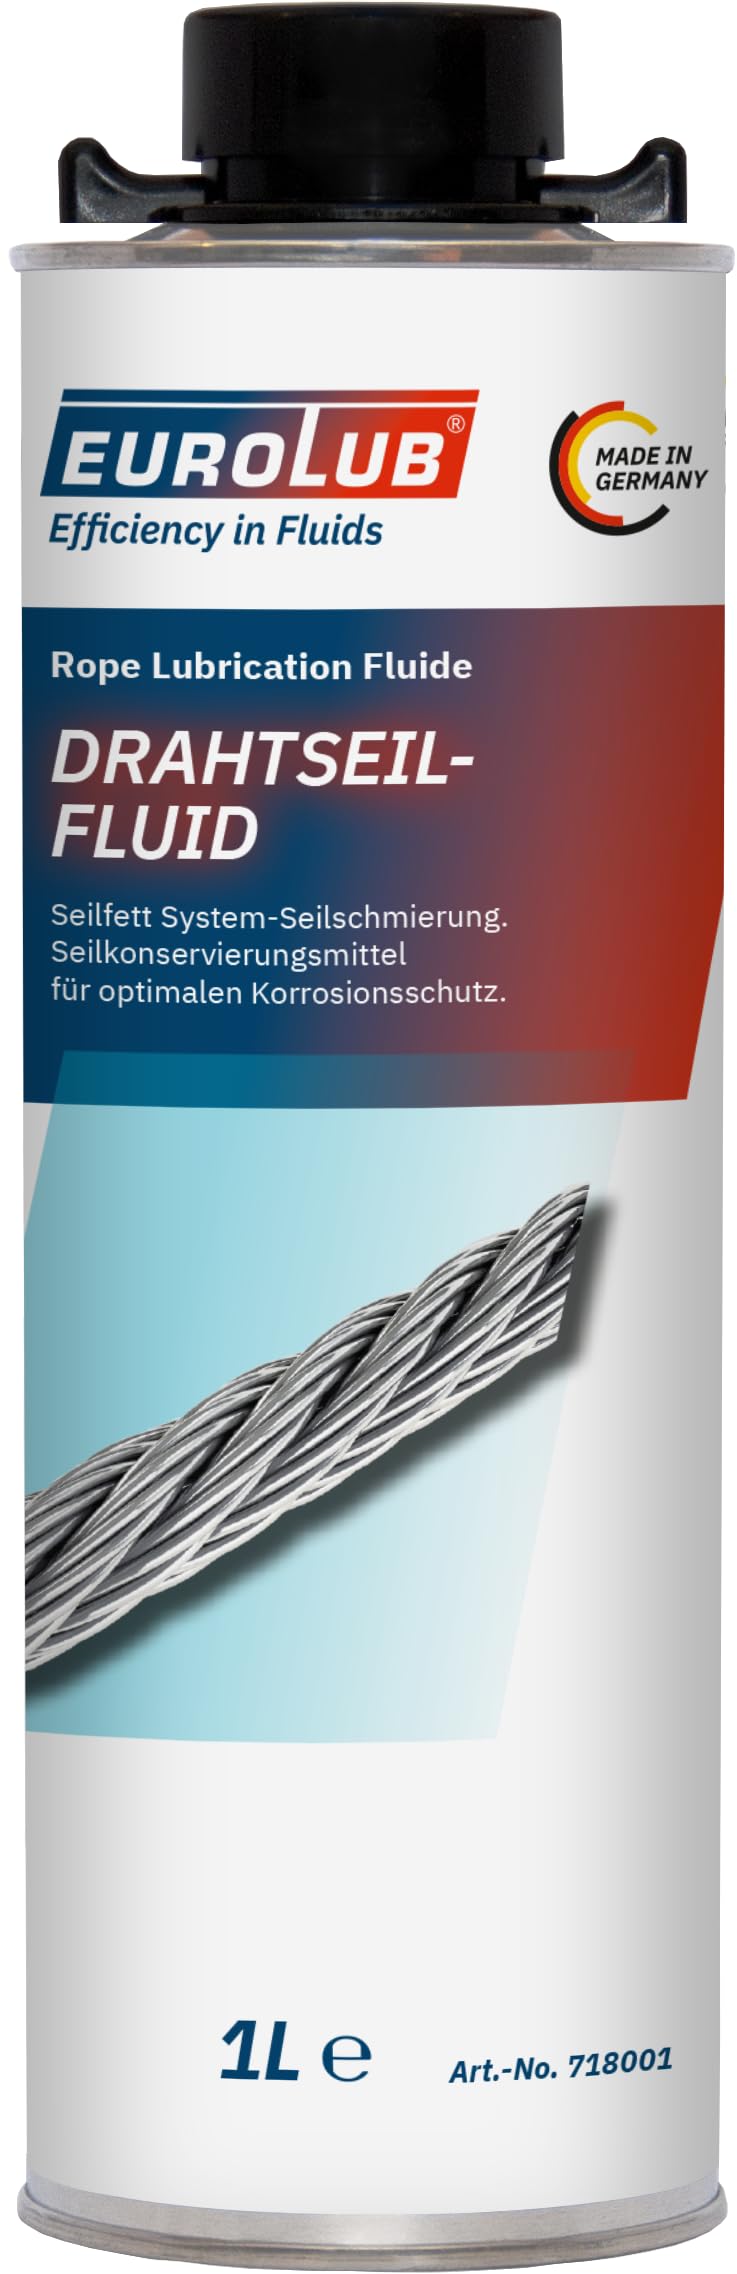 EUROLUB Drahtseil-Fluid Spray, 1 Liter von EUROLUB